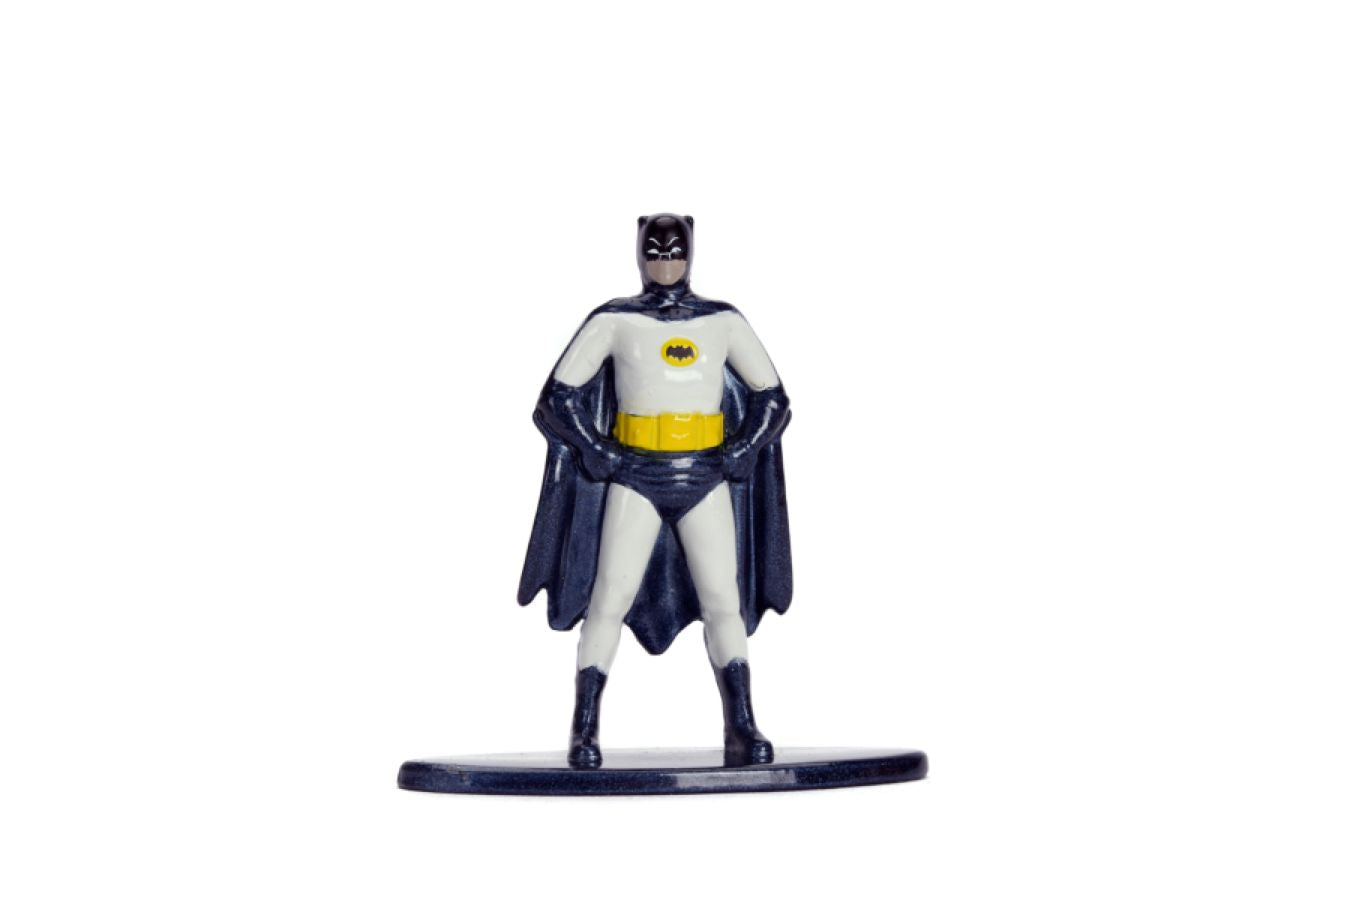 Batman (TV) - Batmobile with Figure 1:32 Scale Hollywood Ride